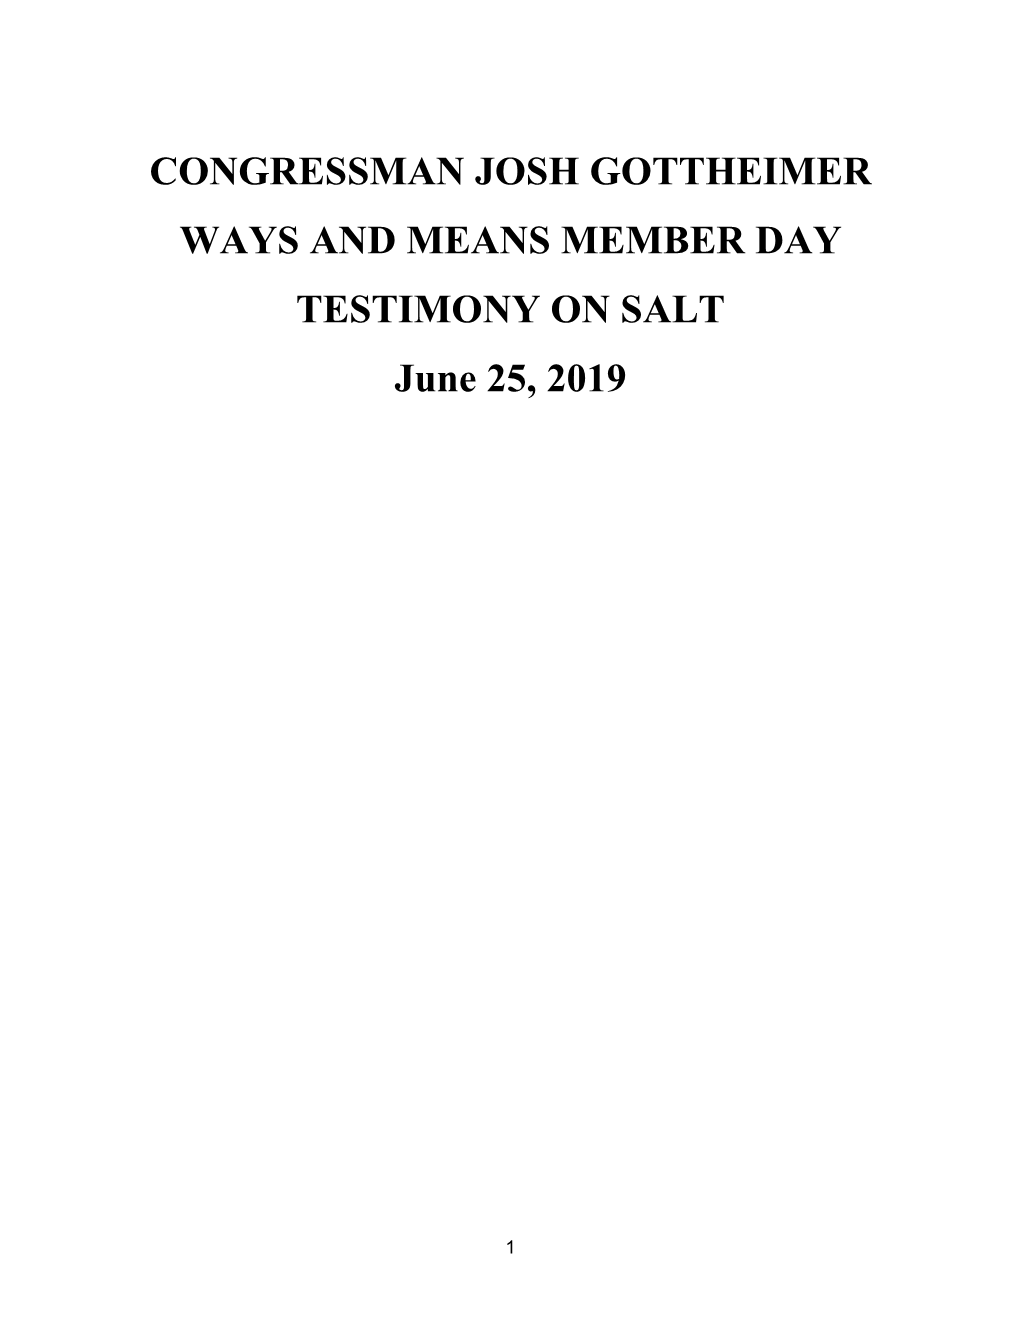 CONGRESSMAN JOSH GOTTHEIMER WAYS and MEANS MEMBER DAY TESTIMONY on SALT June 25, 2019